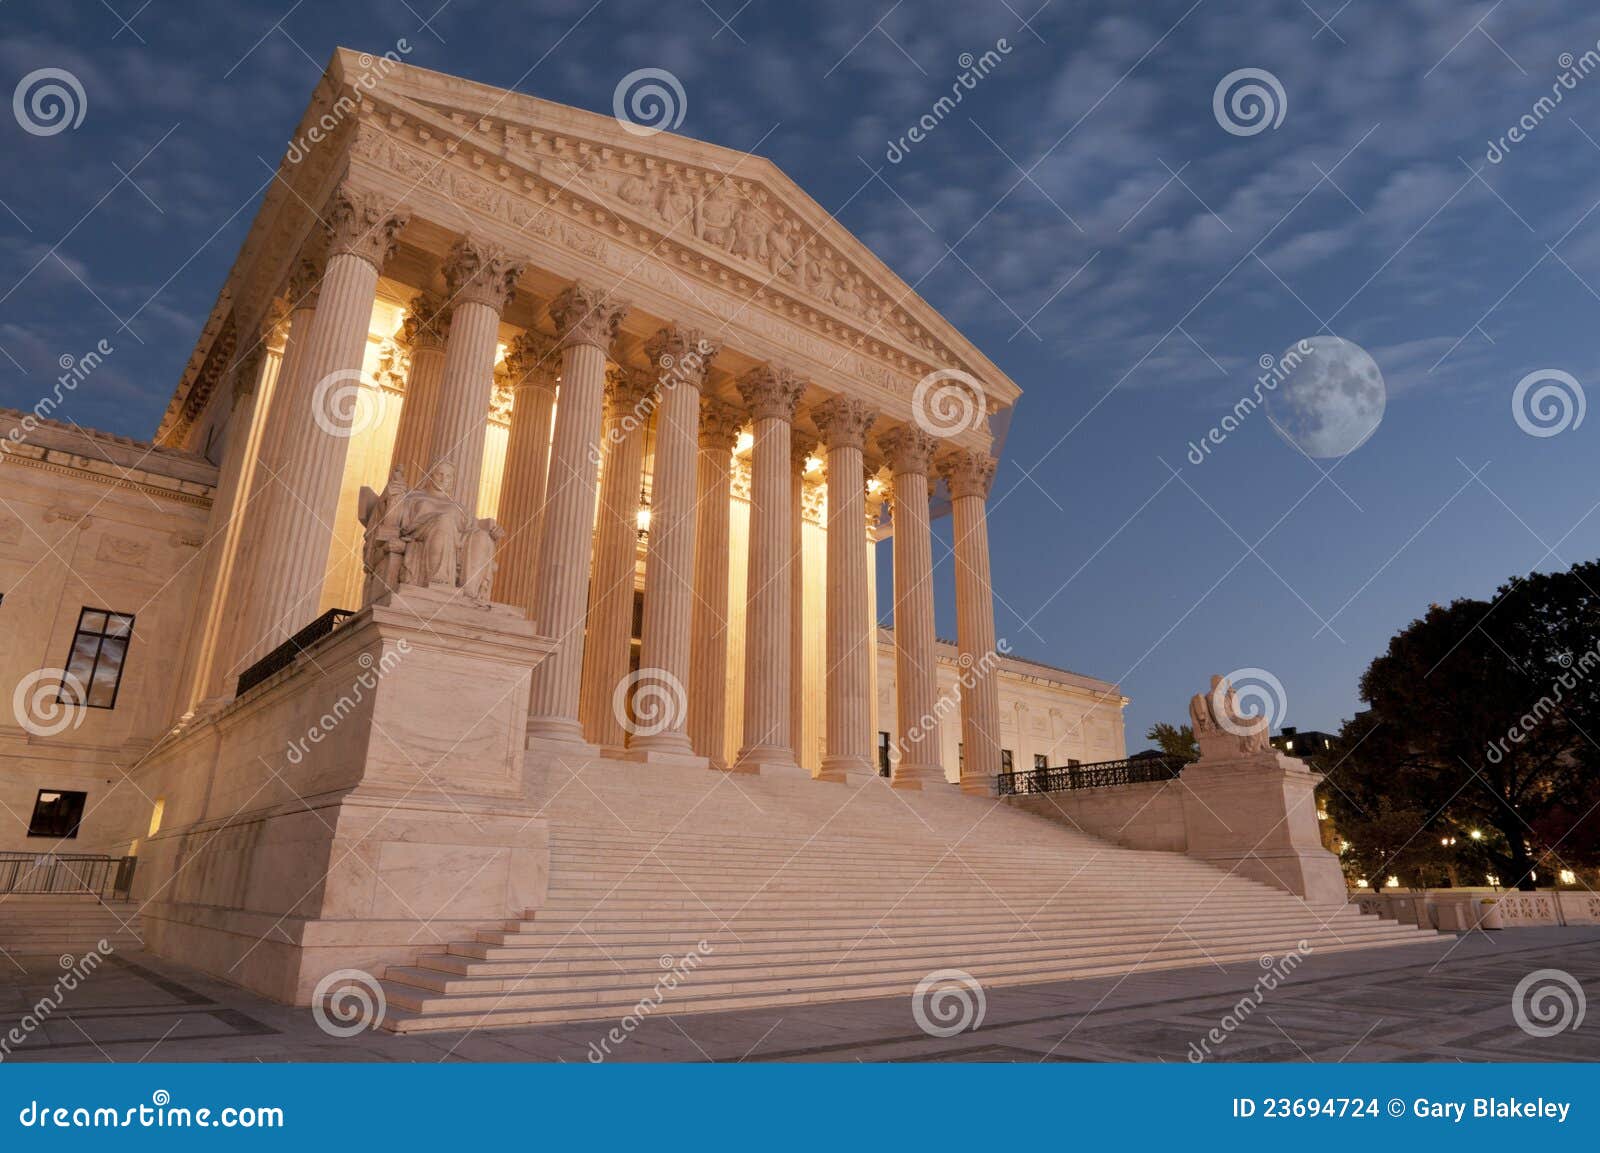 moon over us supreme court